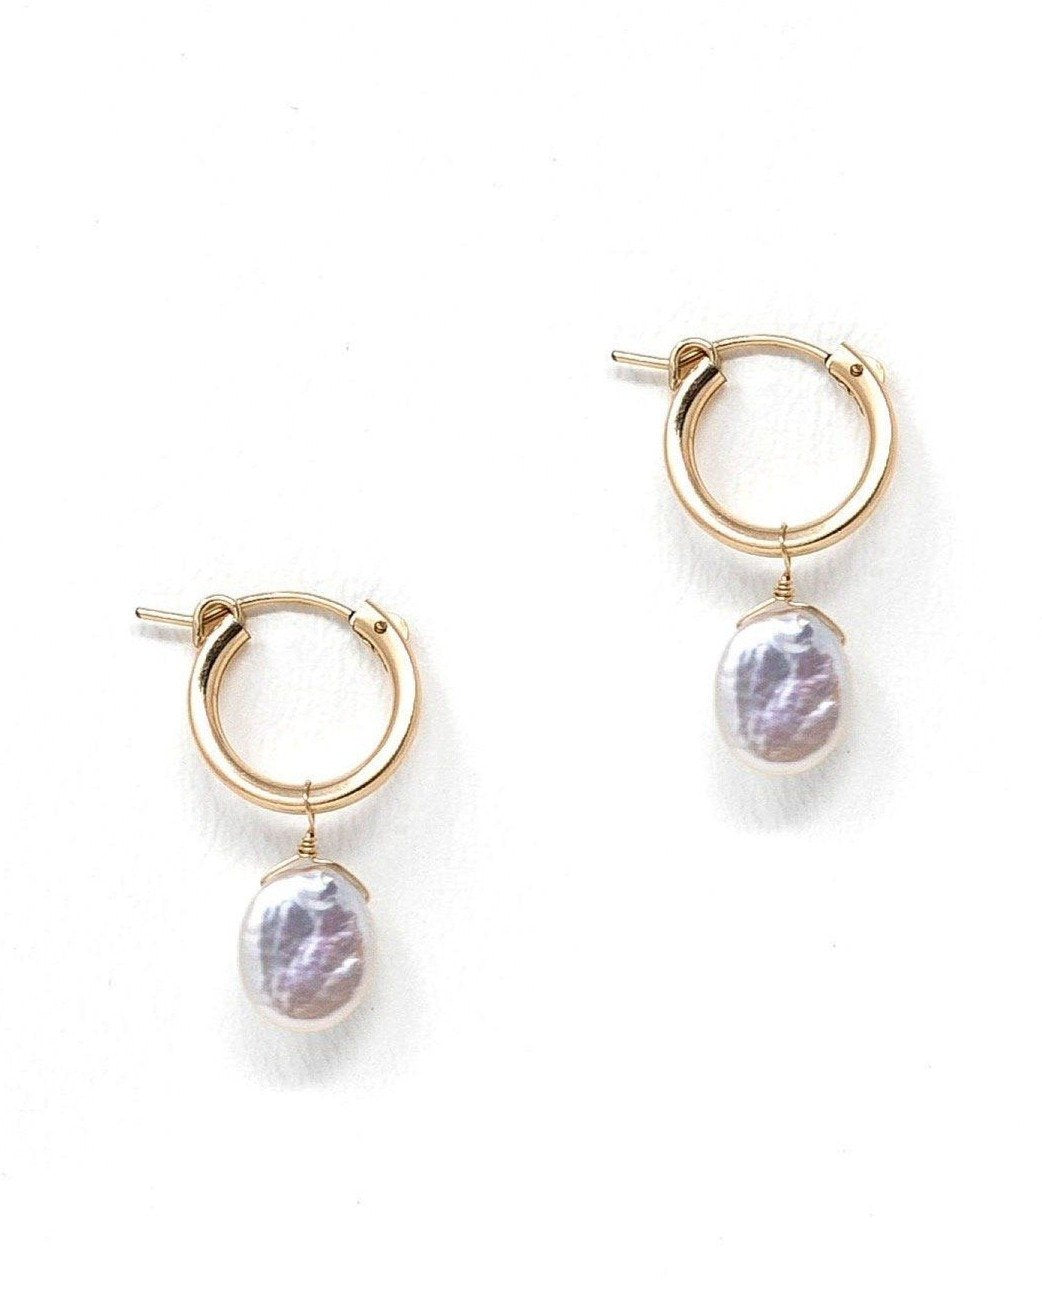 Nancy Hoop Earrings by KOZAKH. 15mm snap closure hoop earrings in 14K Gold Filled, featuring a 13mm flat oval Pearl.